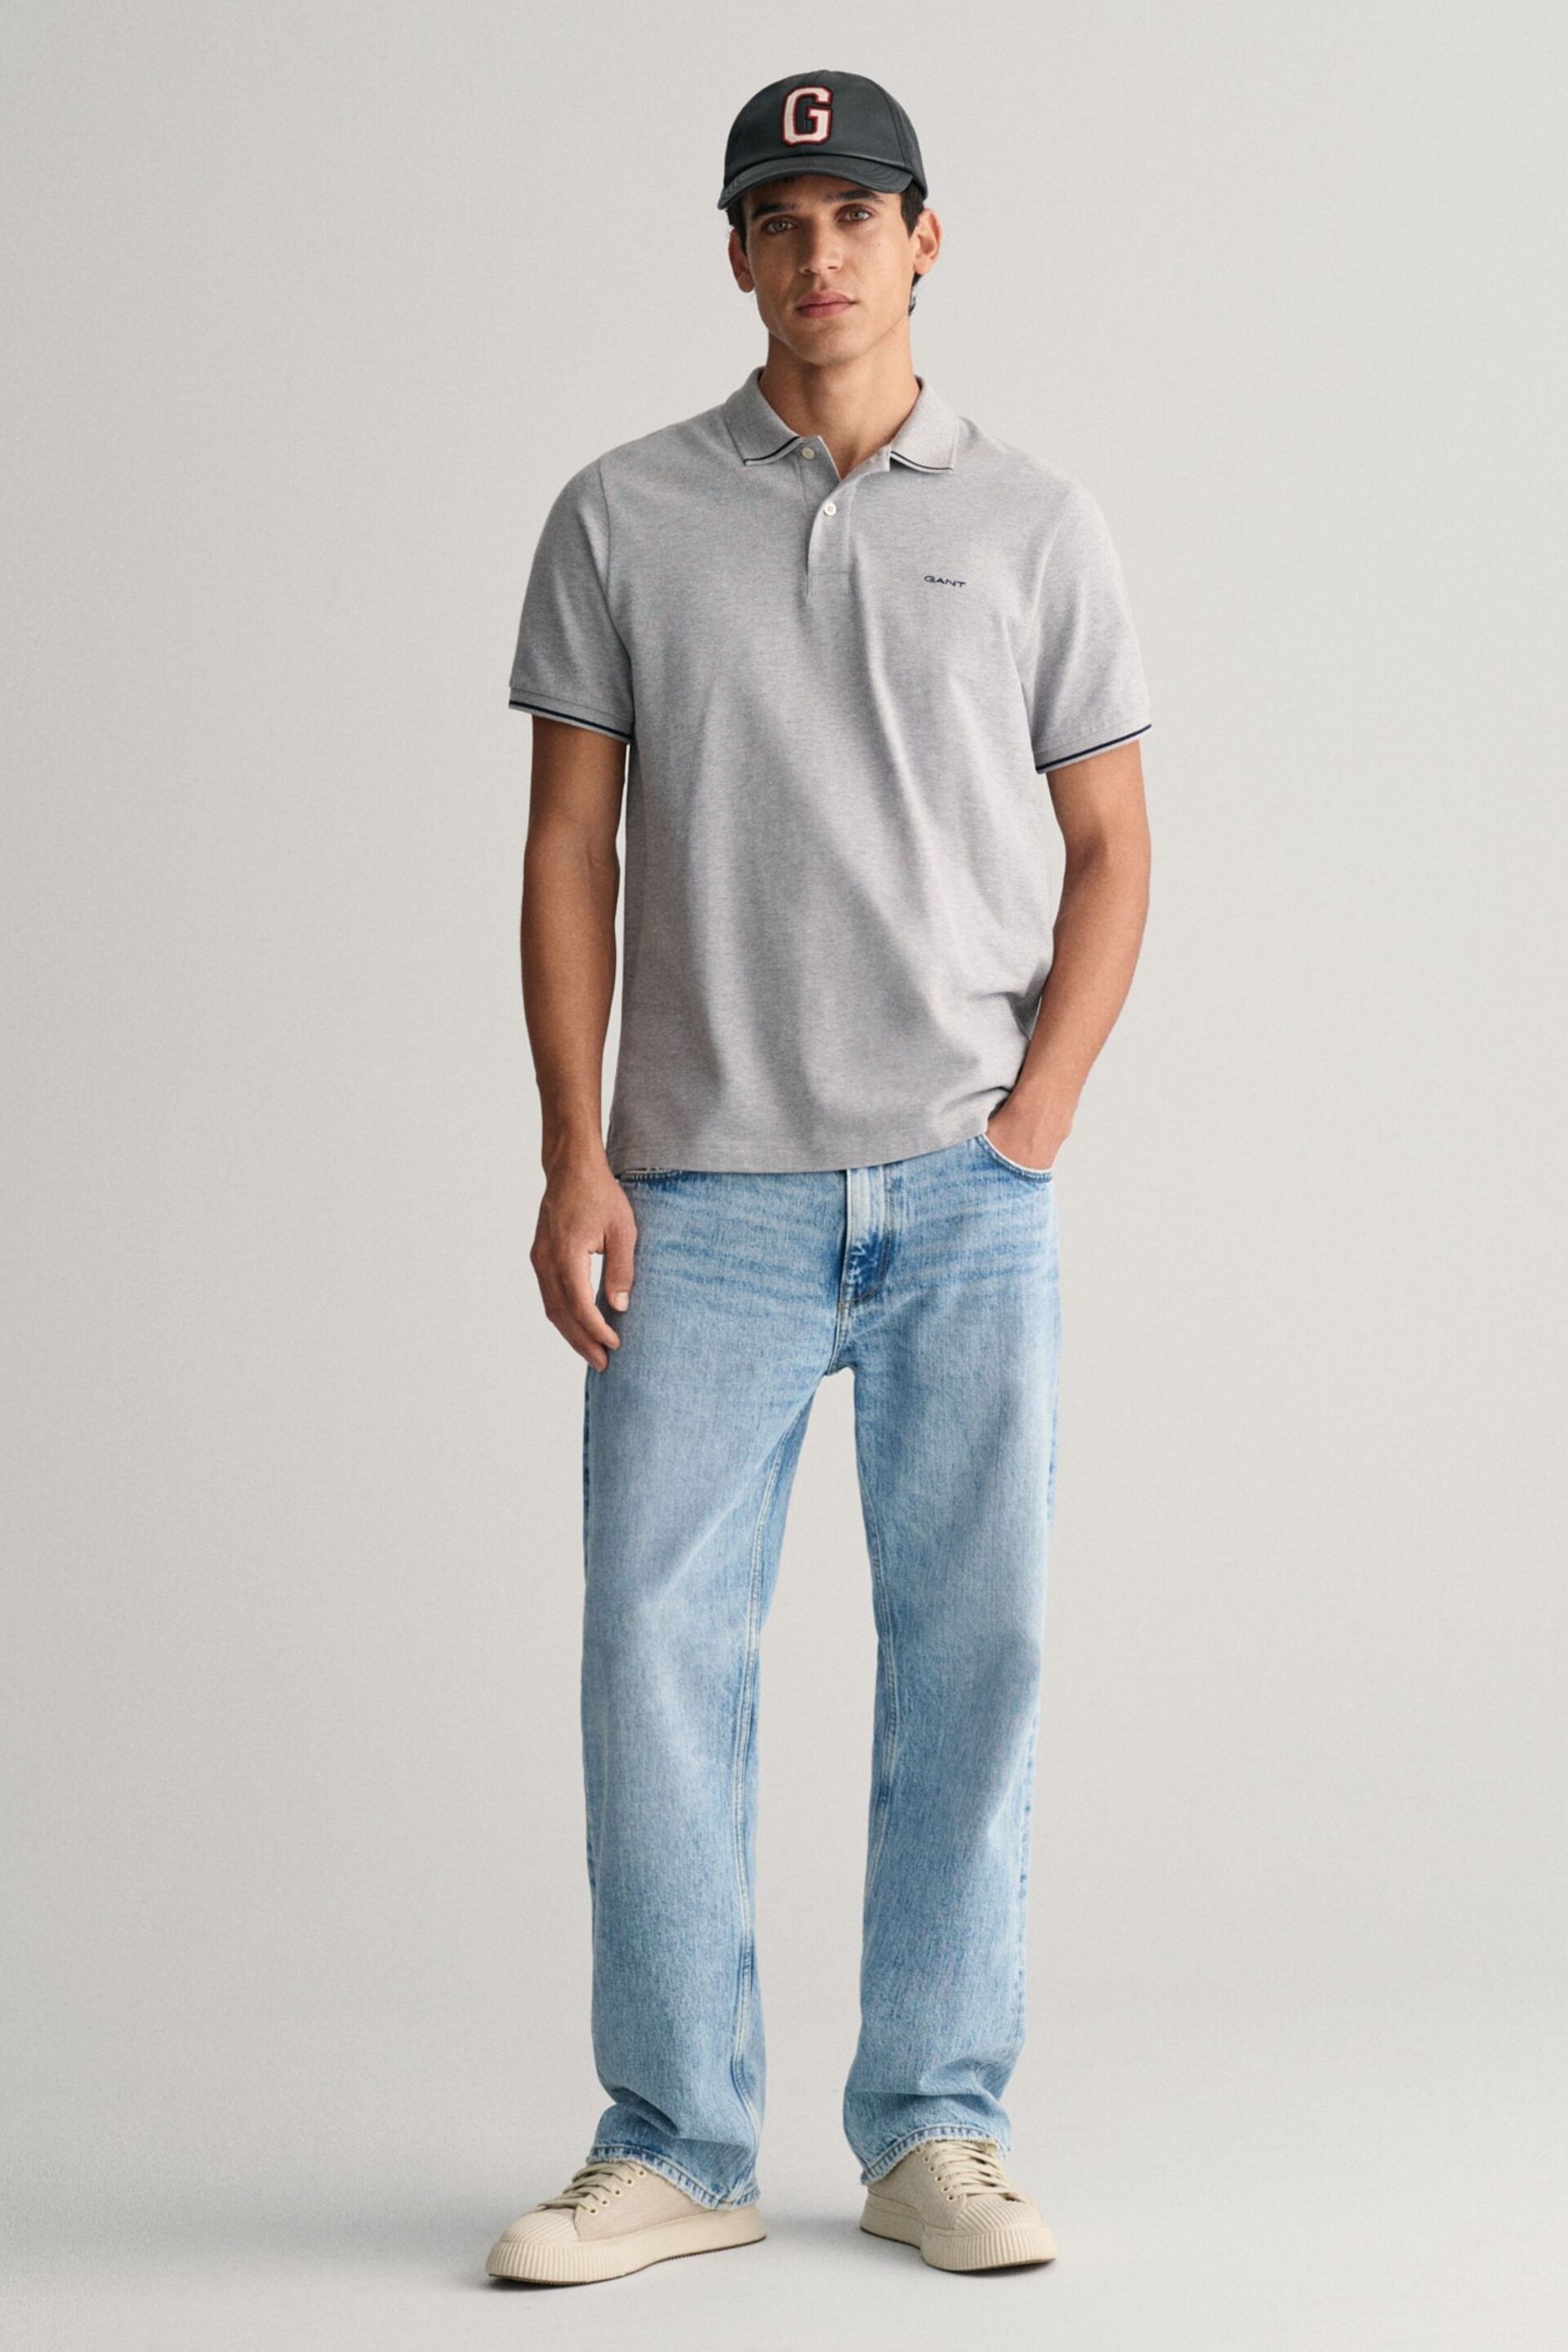 GANT Grey Tipped Piqué Polo Shirt - Image 3 of 5